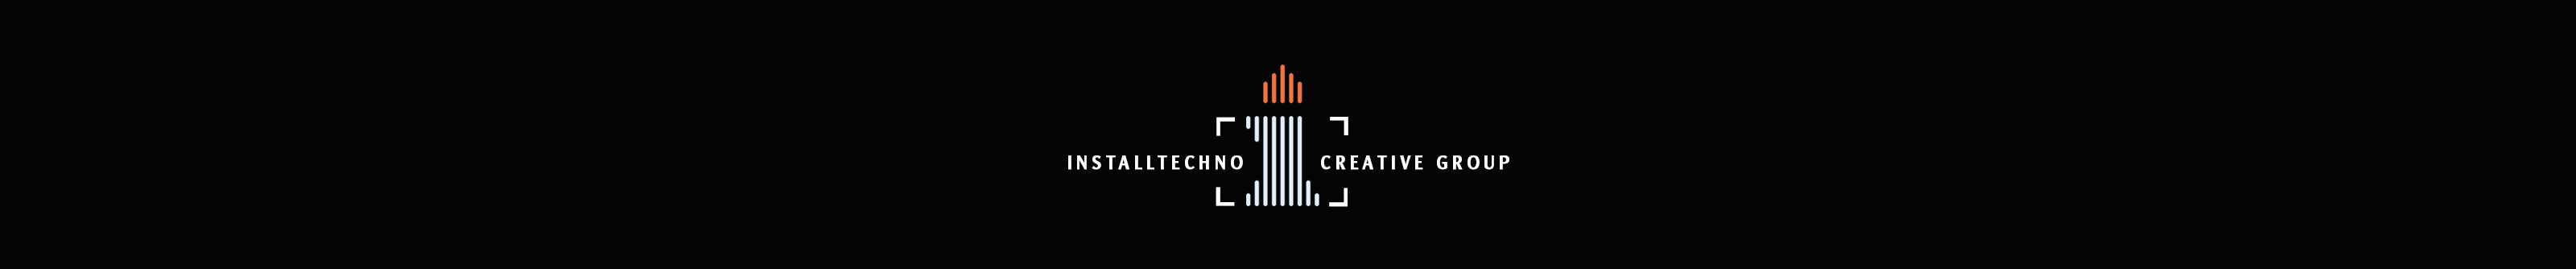 Installtechno Creative Group profil başlığı